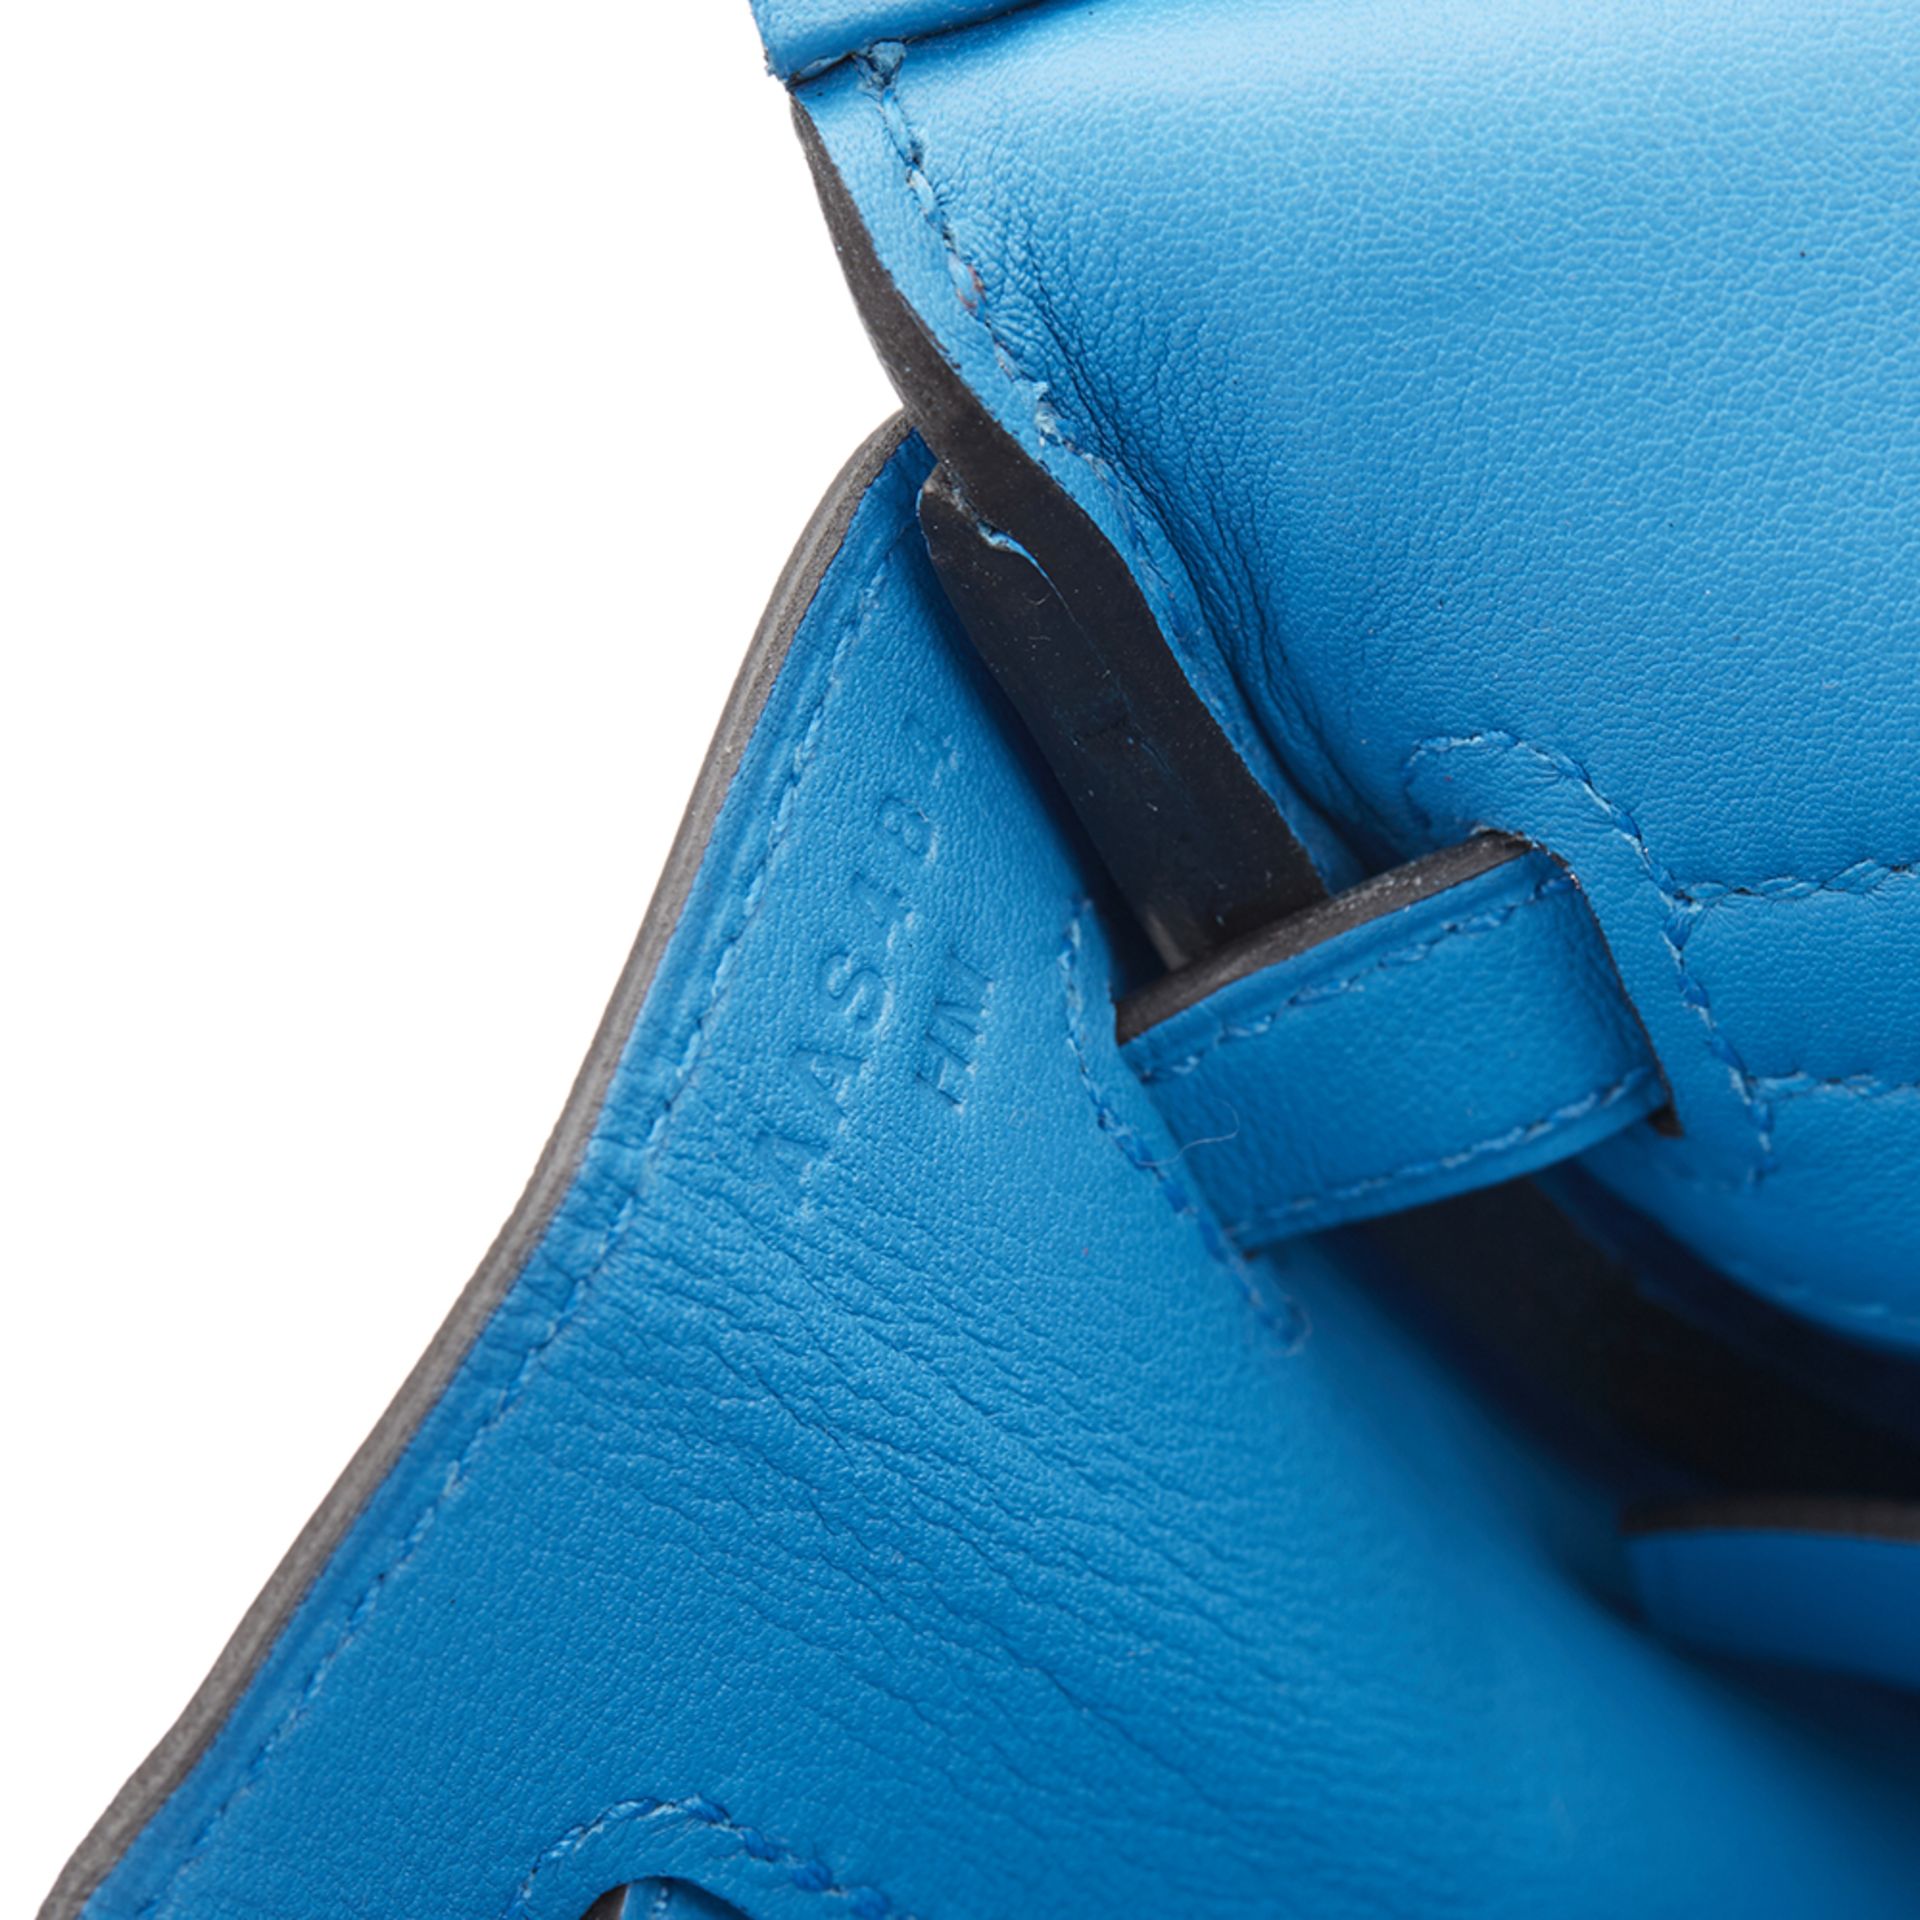 Blue Zanzibar Swift Leather Birkin 25cm - Image 10 of 10